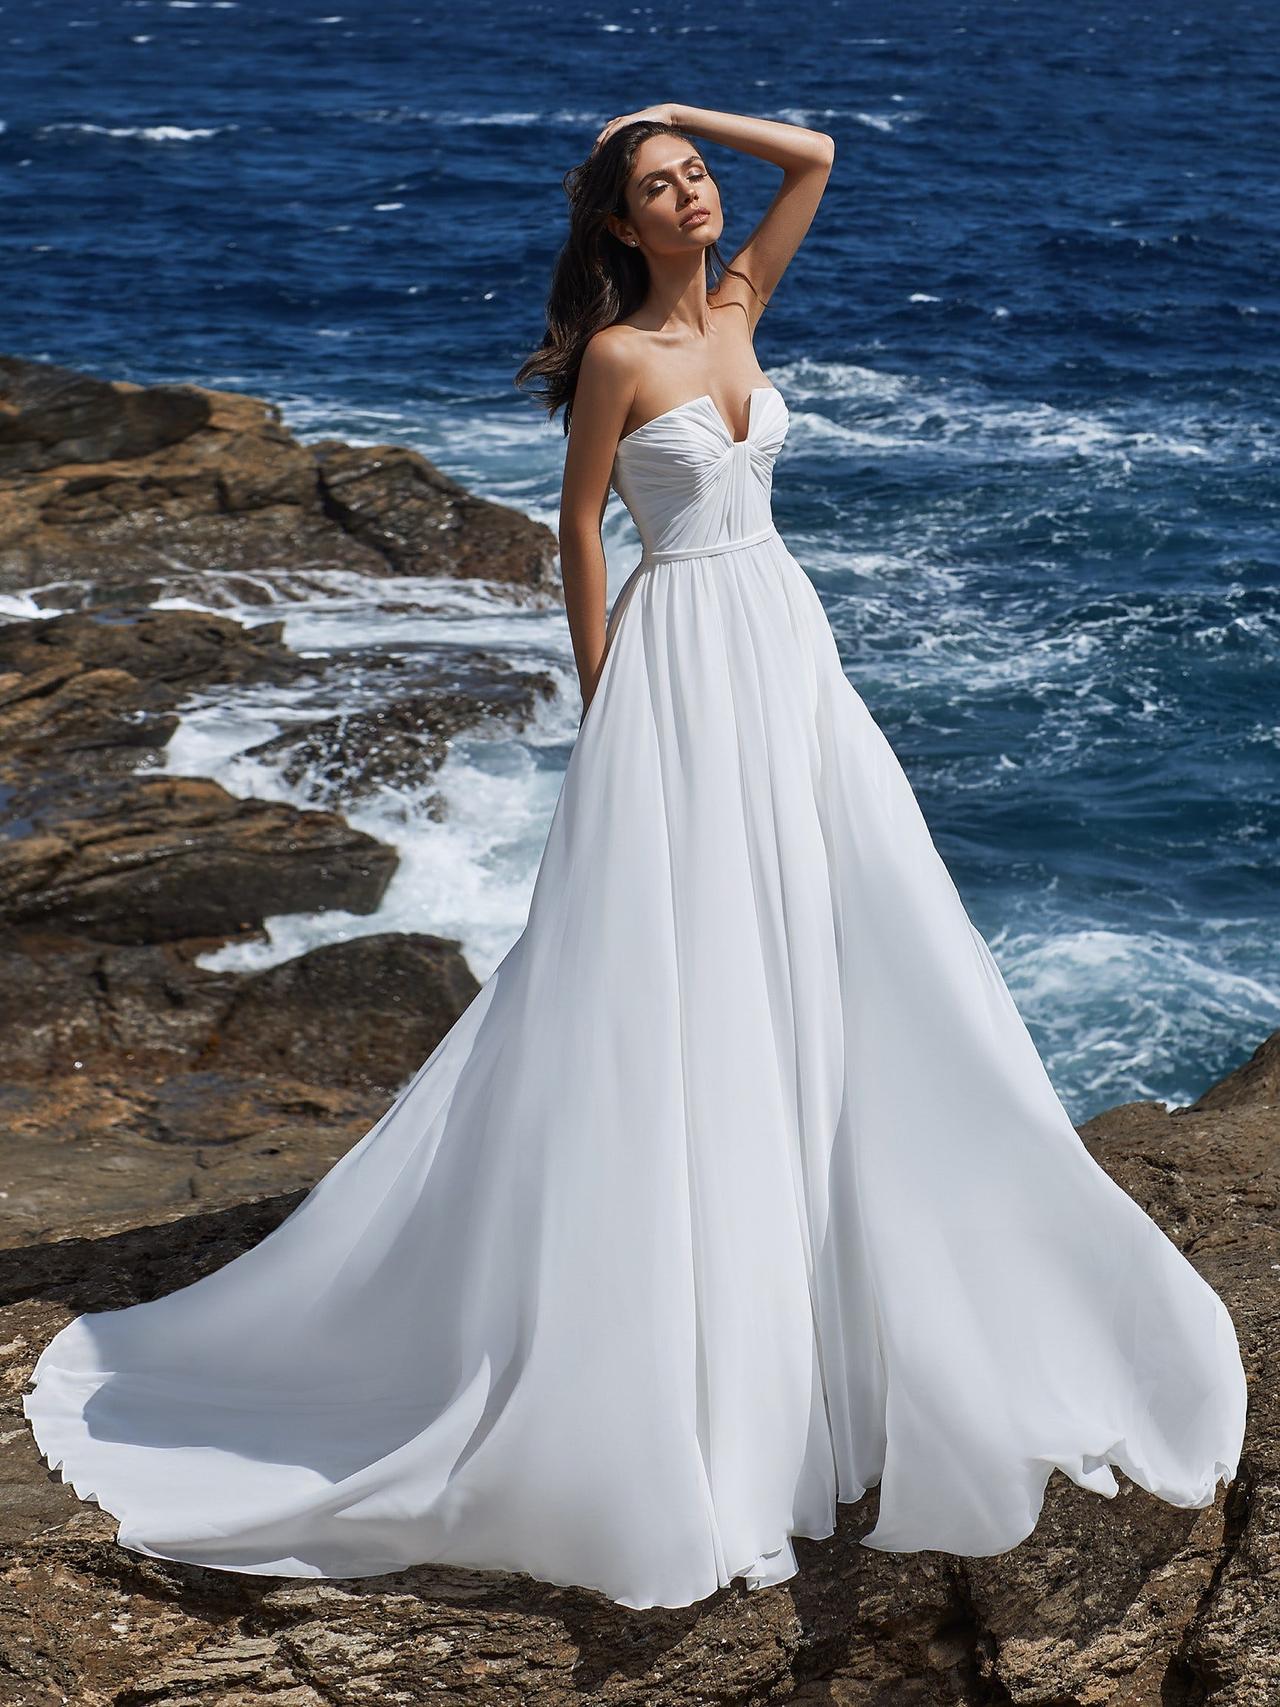 Model in a strapless wedding dress